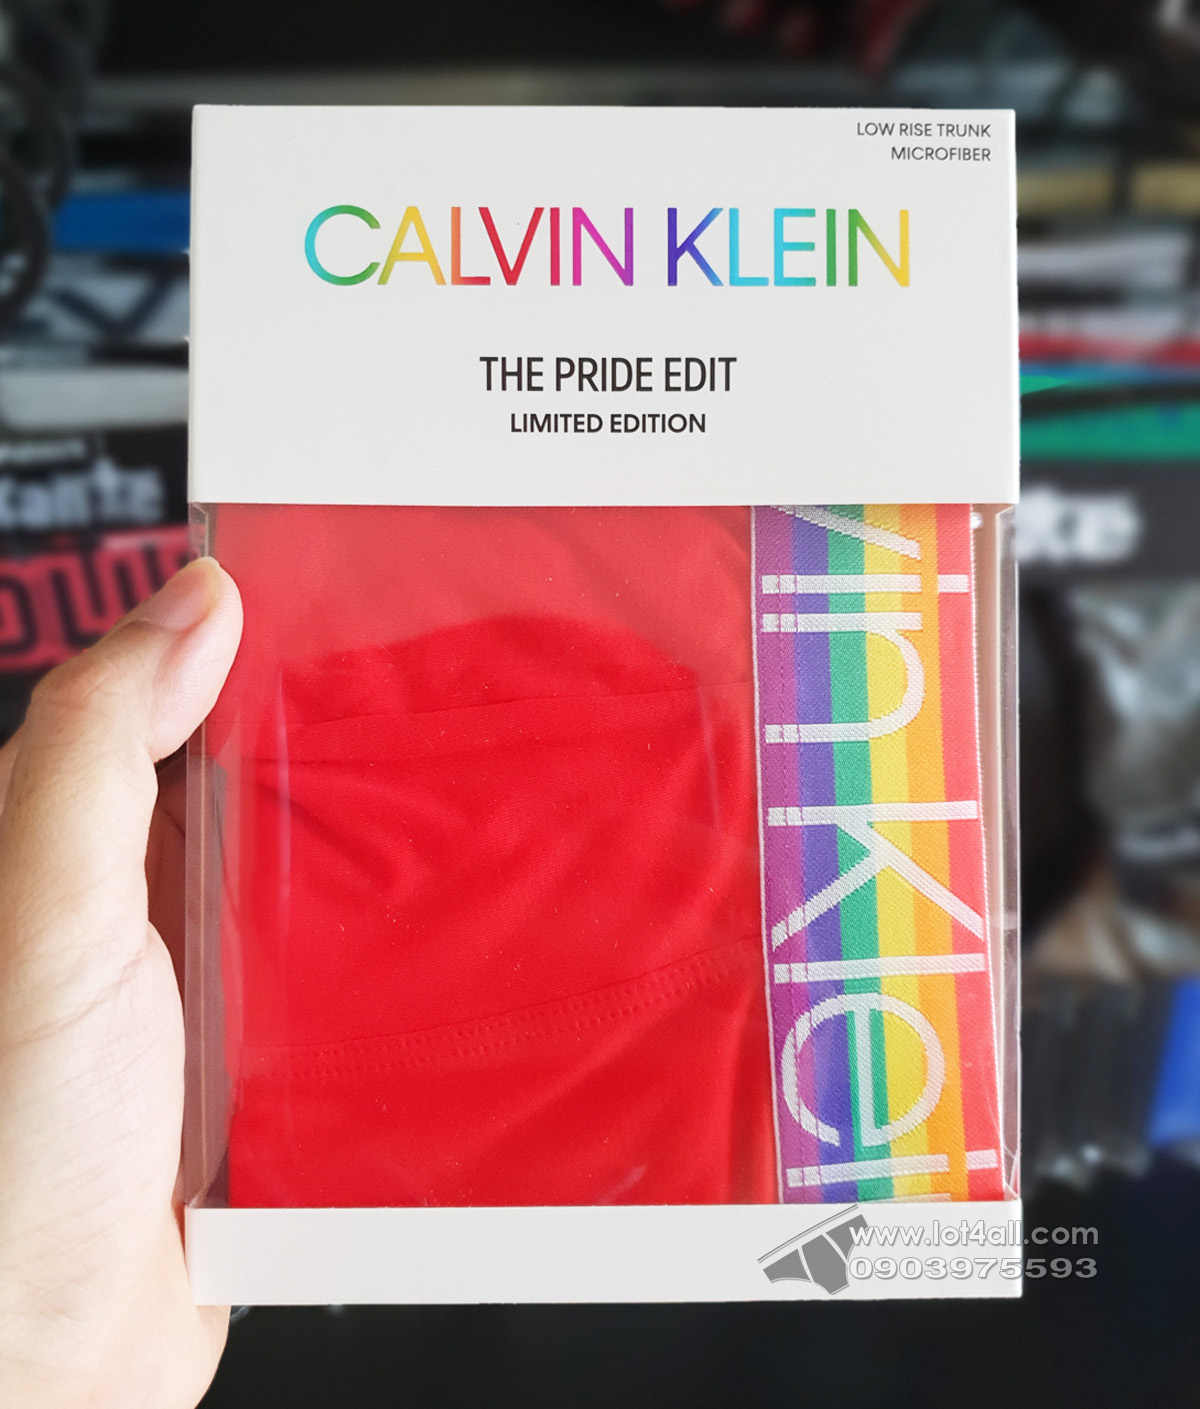 Quần lót nam Calvin Klein NB2204 Pride Micro Low Rise Trunk Red